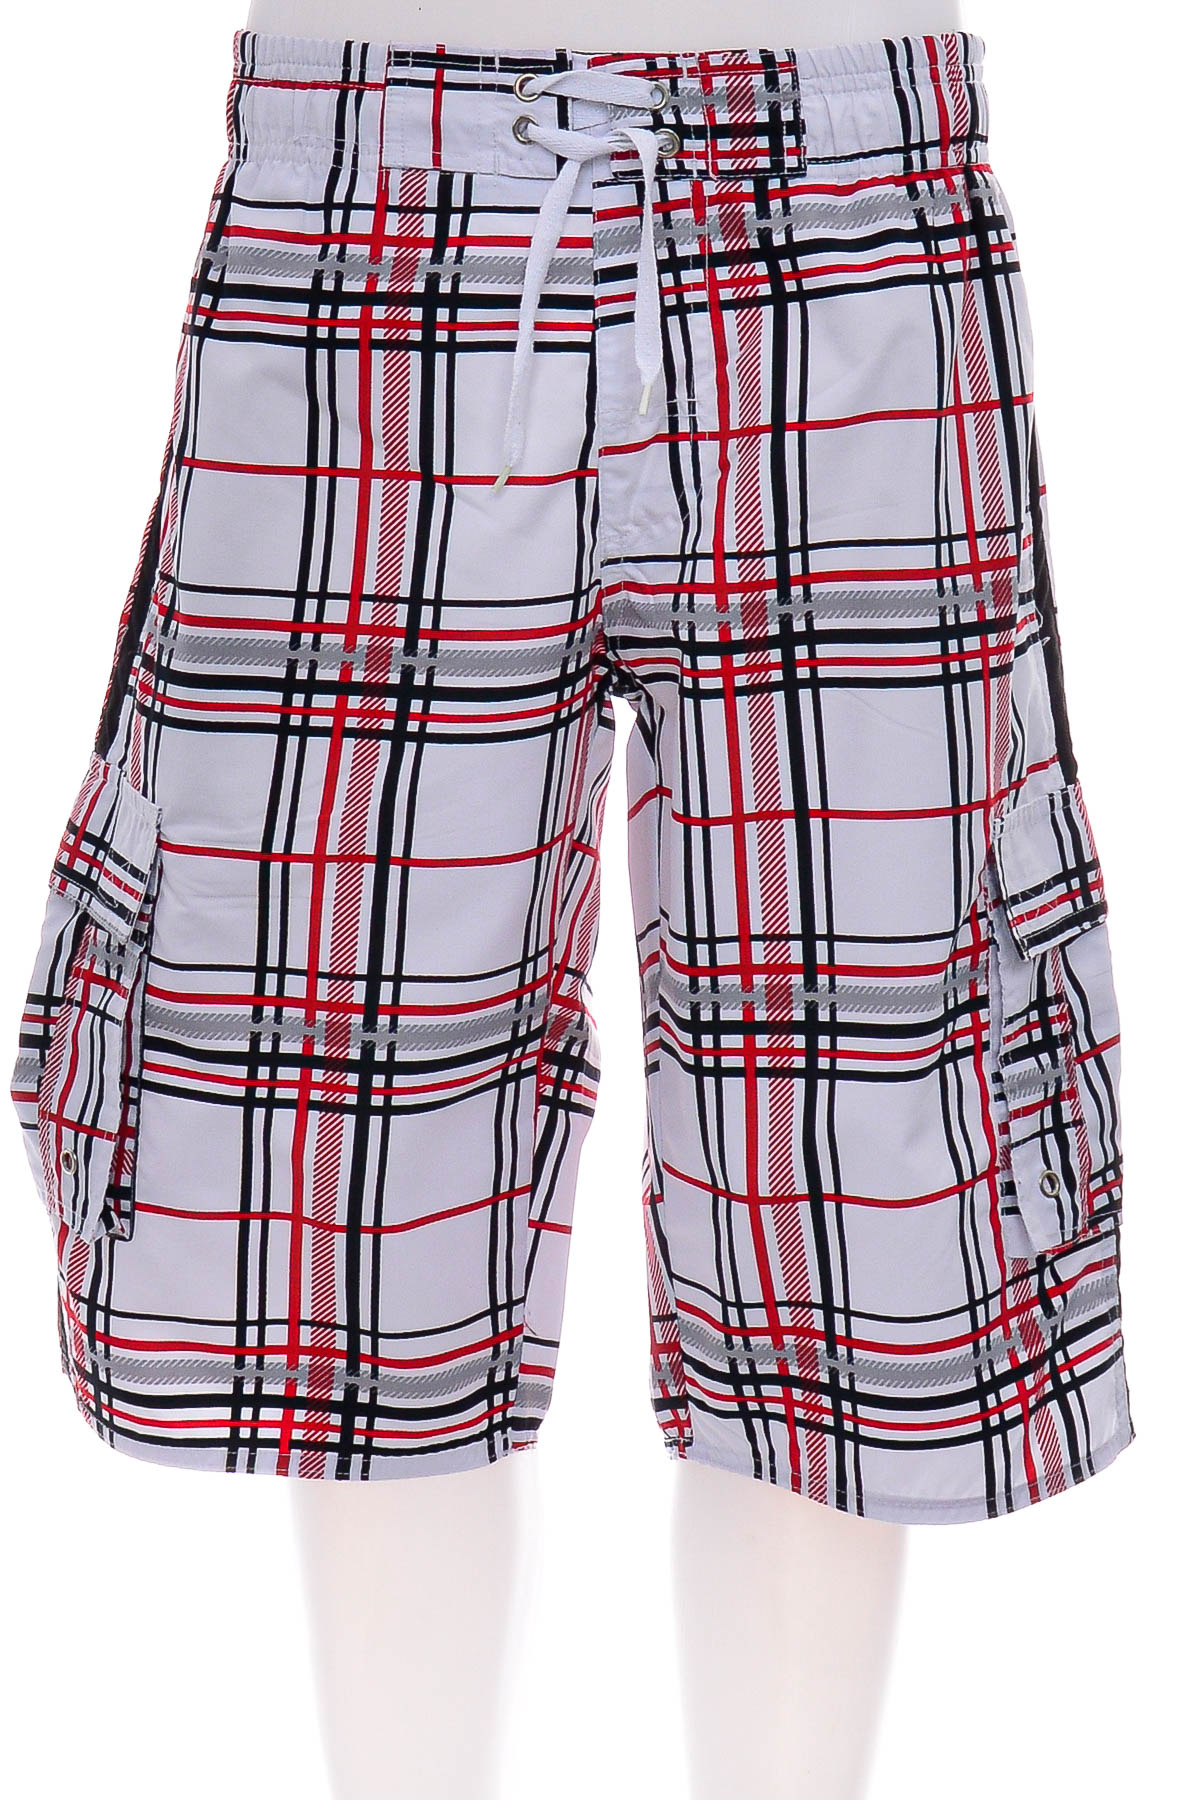 Men's shorts - Saps - 0